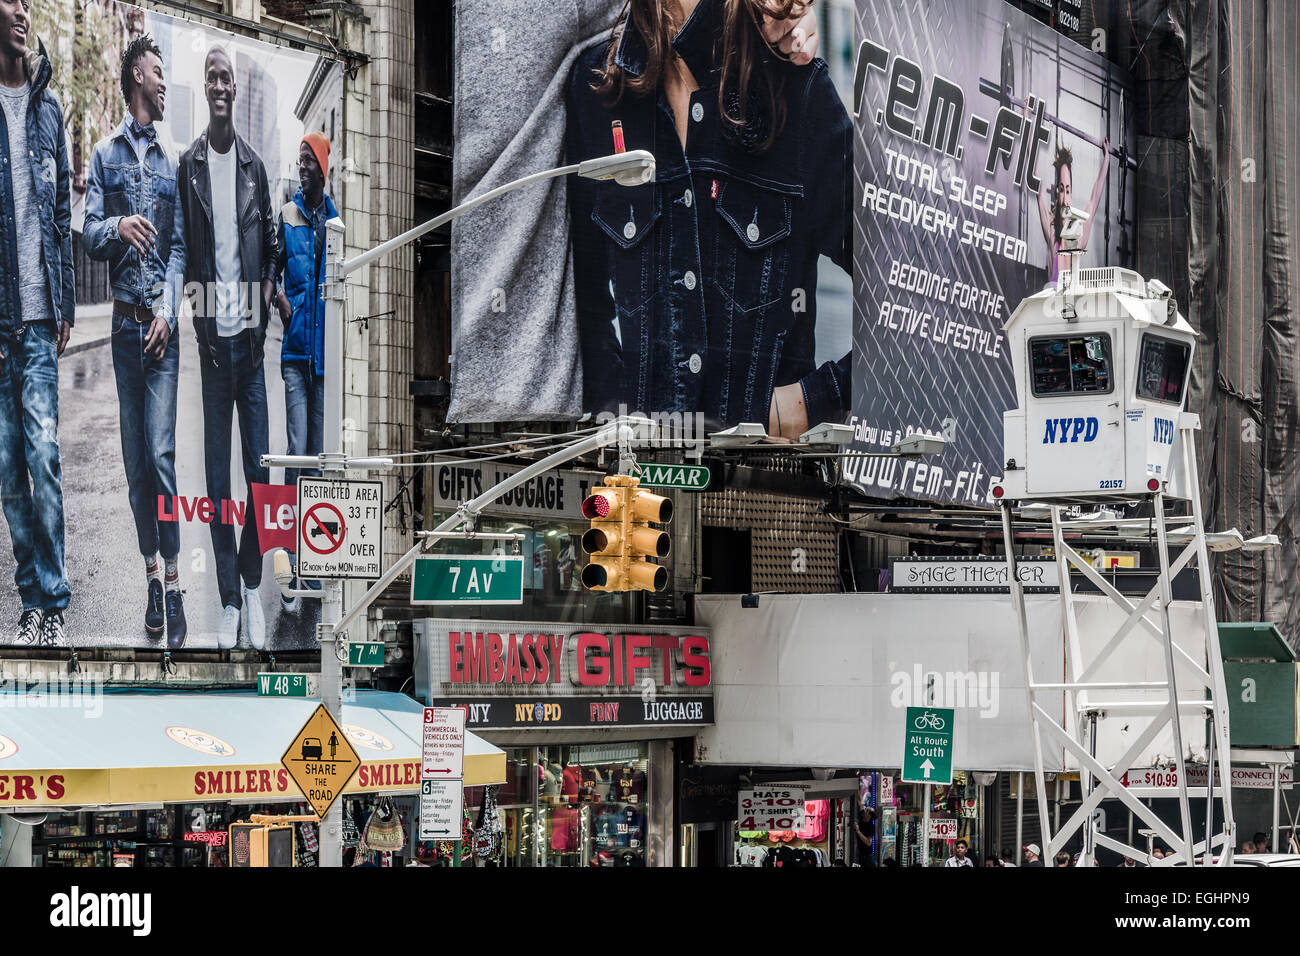 Ein New York Police Department Beobachtungsposten Blick auf Times Square in Midtown Manhattan, New York - USA. Stockfoto